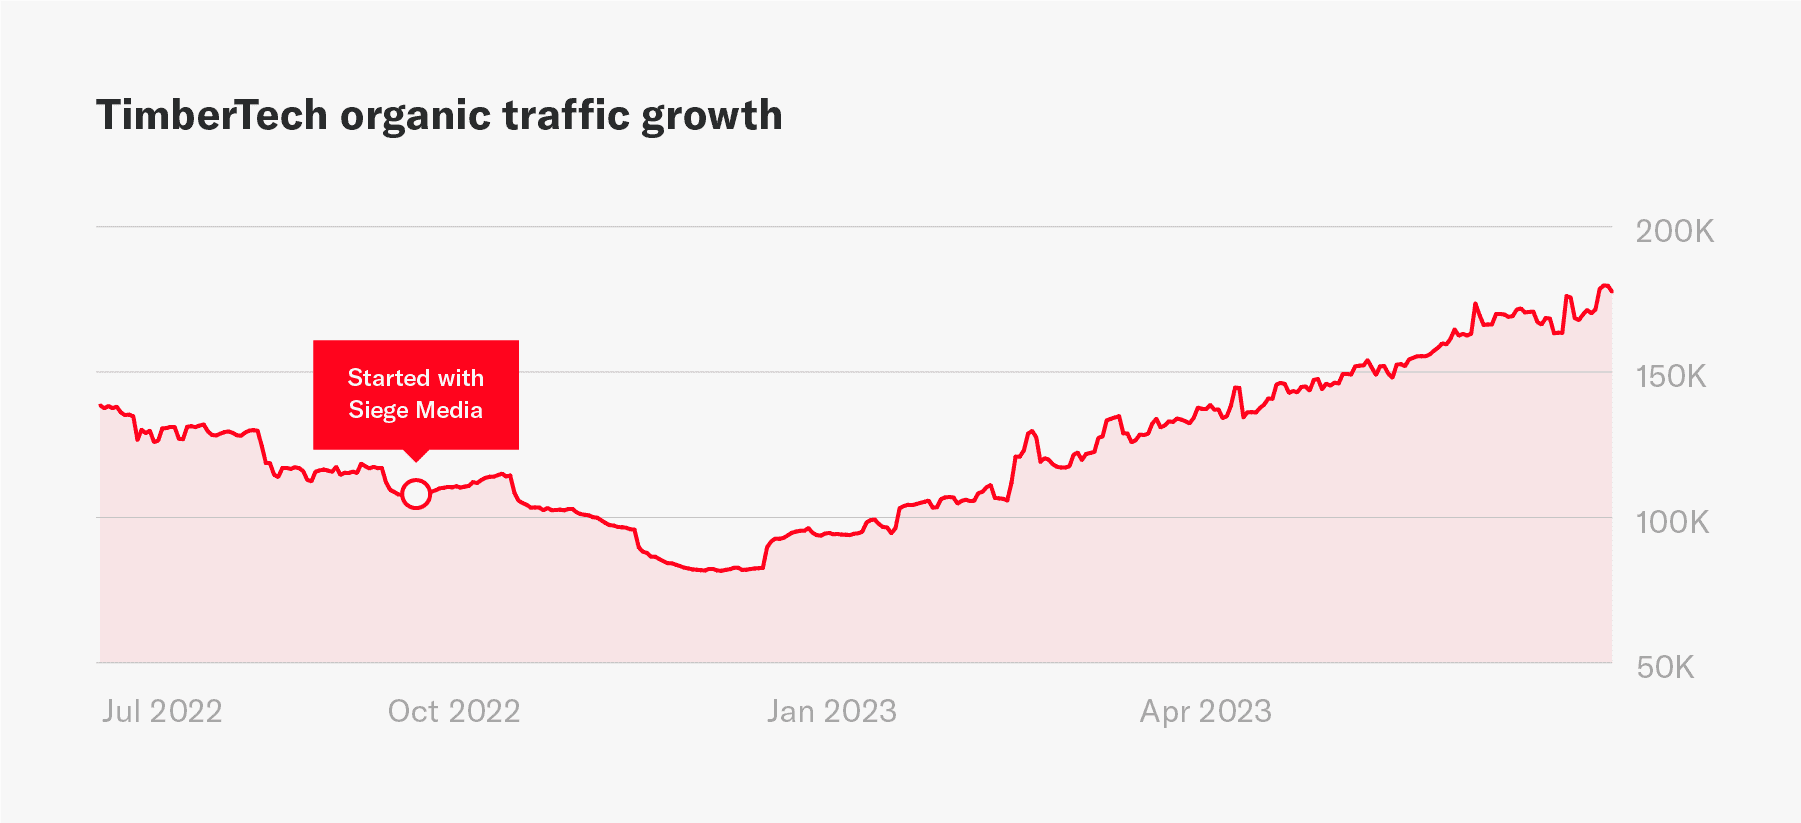 The impact of Siege Media on TimberTech's organic traffic growth